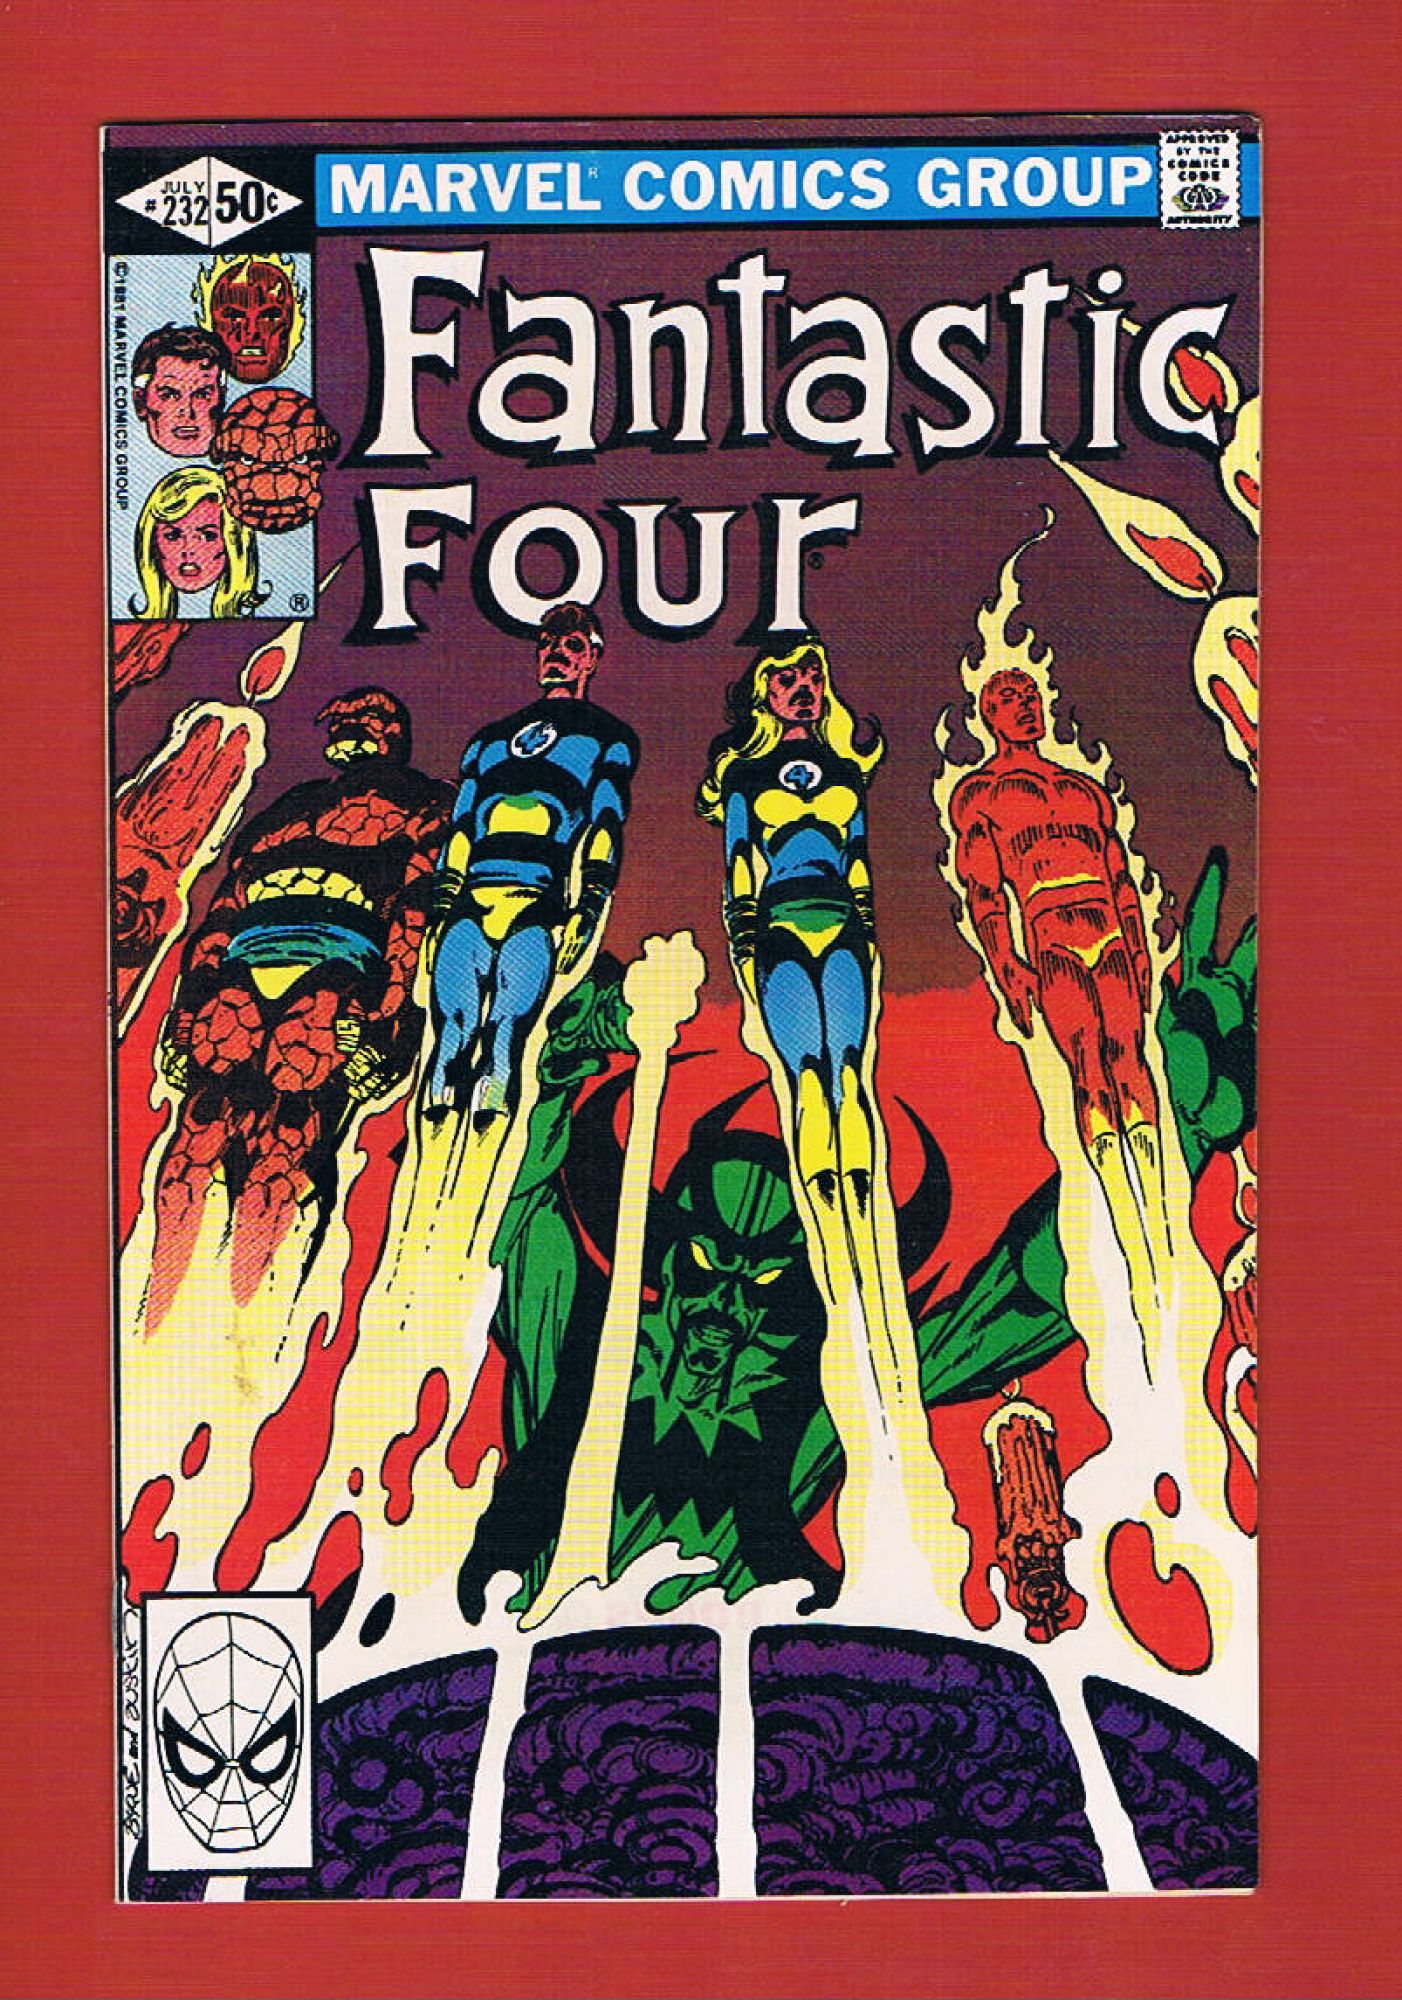 Fantastic Four #232, Jul 1981, 8.5 VF+